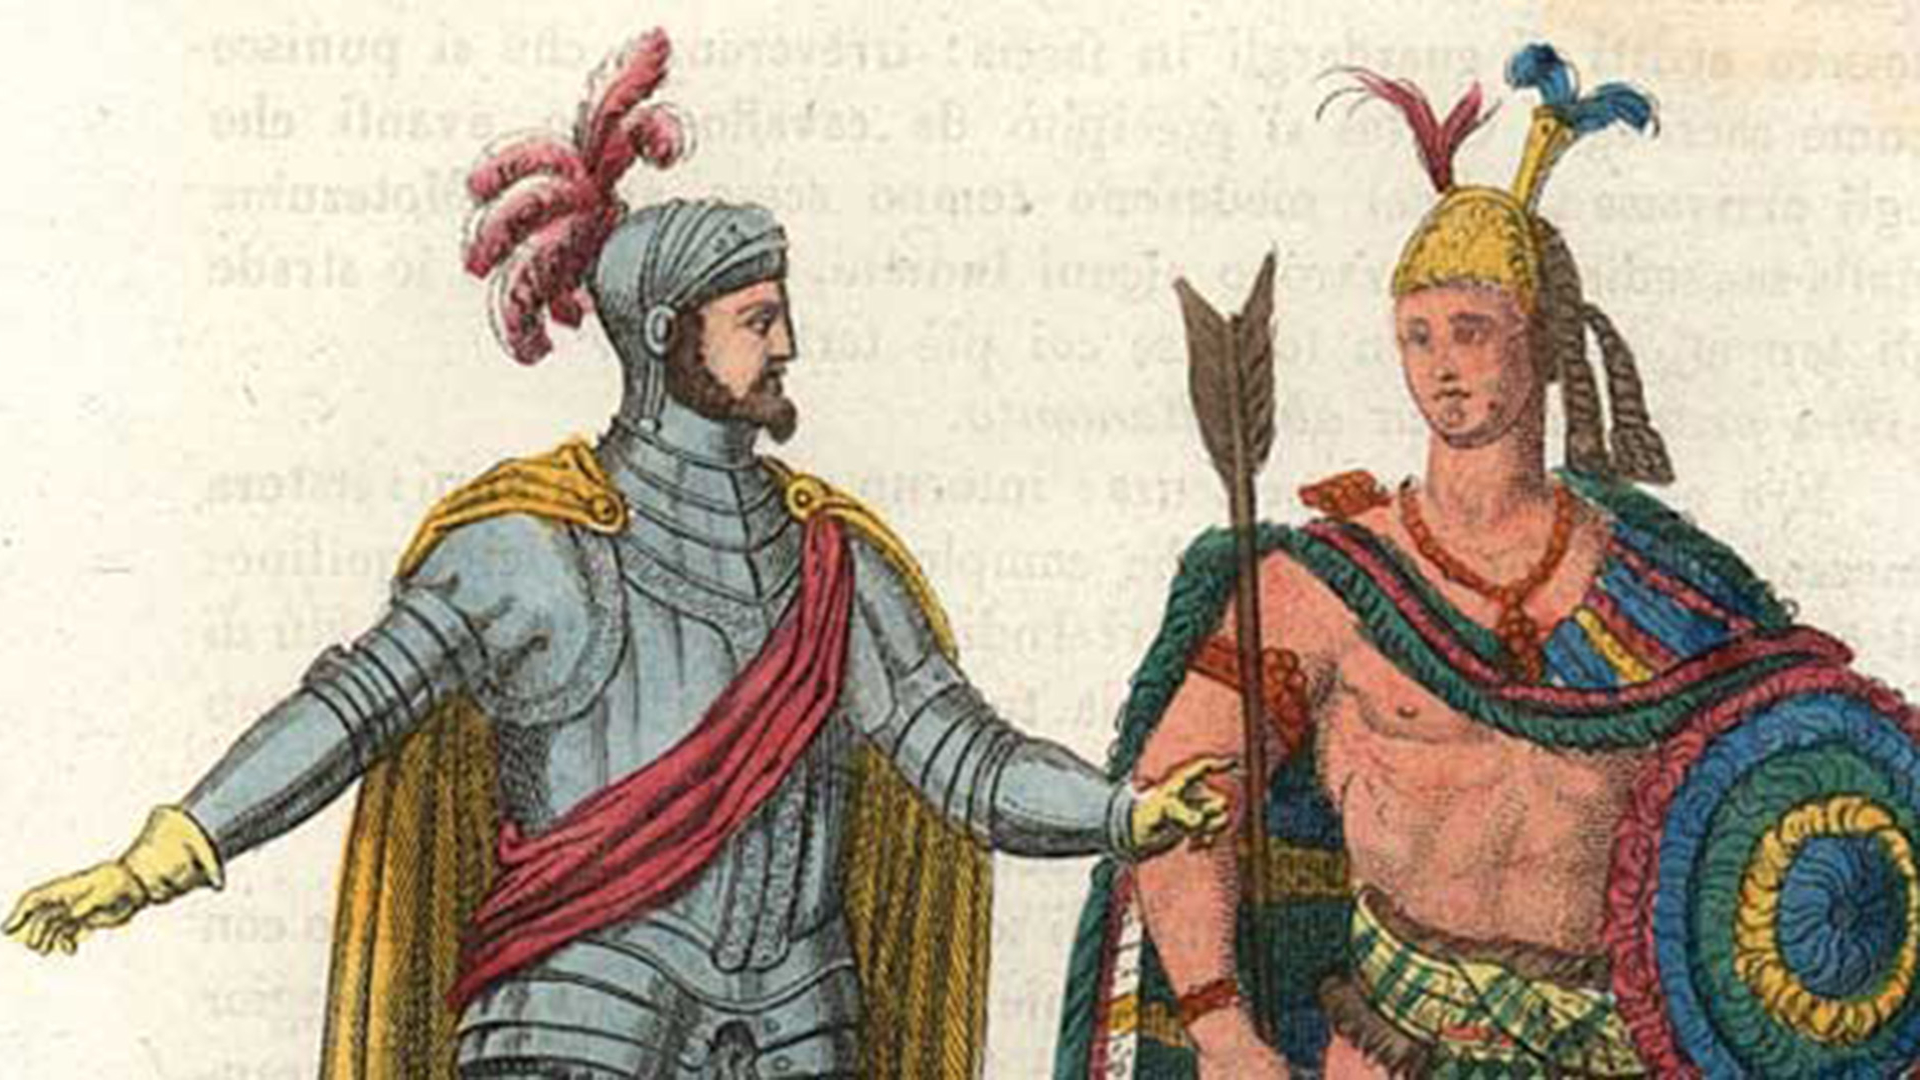 El emperador Moctezuma II y Hernán Cortés (imagen: lahistoriamexicana.mx)